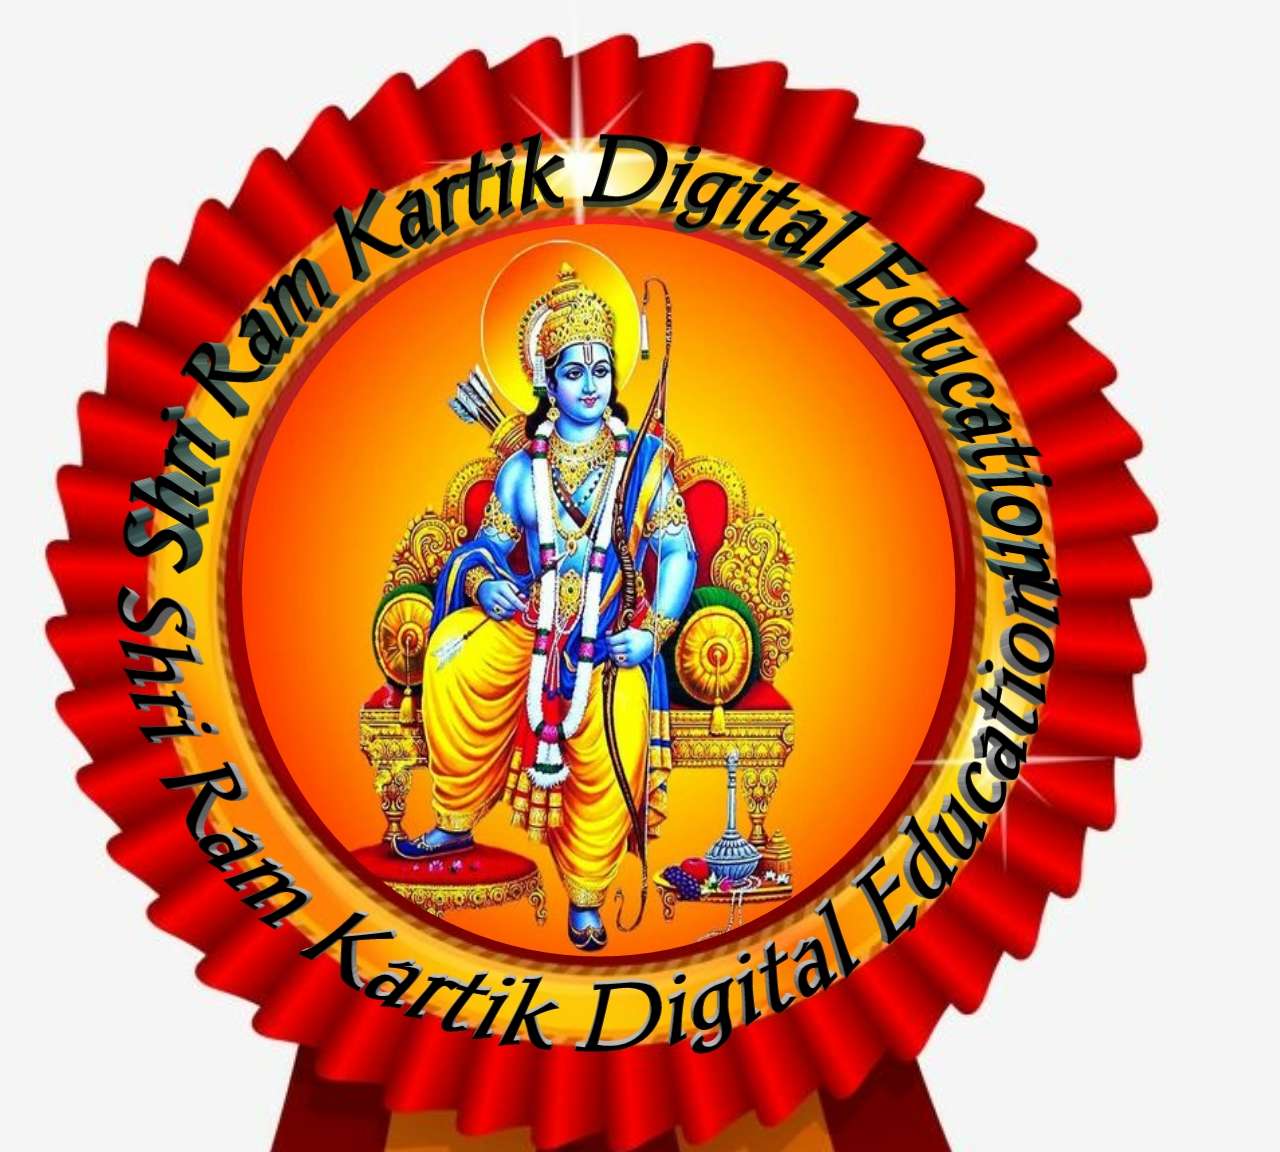 Anzai Svinde bort landing Shri Ram Kartik Digital Education - Crunchbase Company Profile & Funding